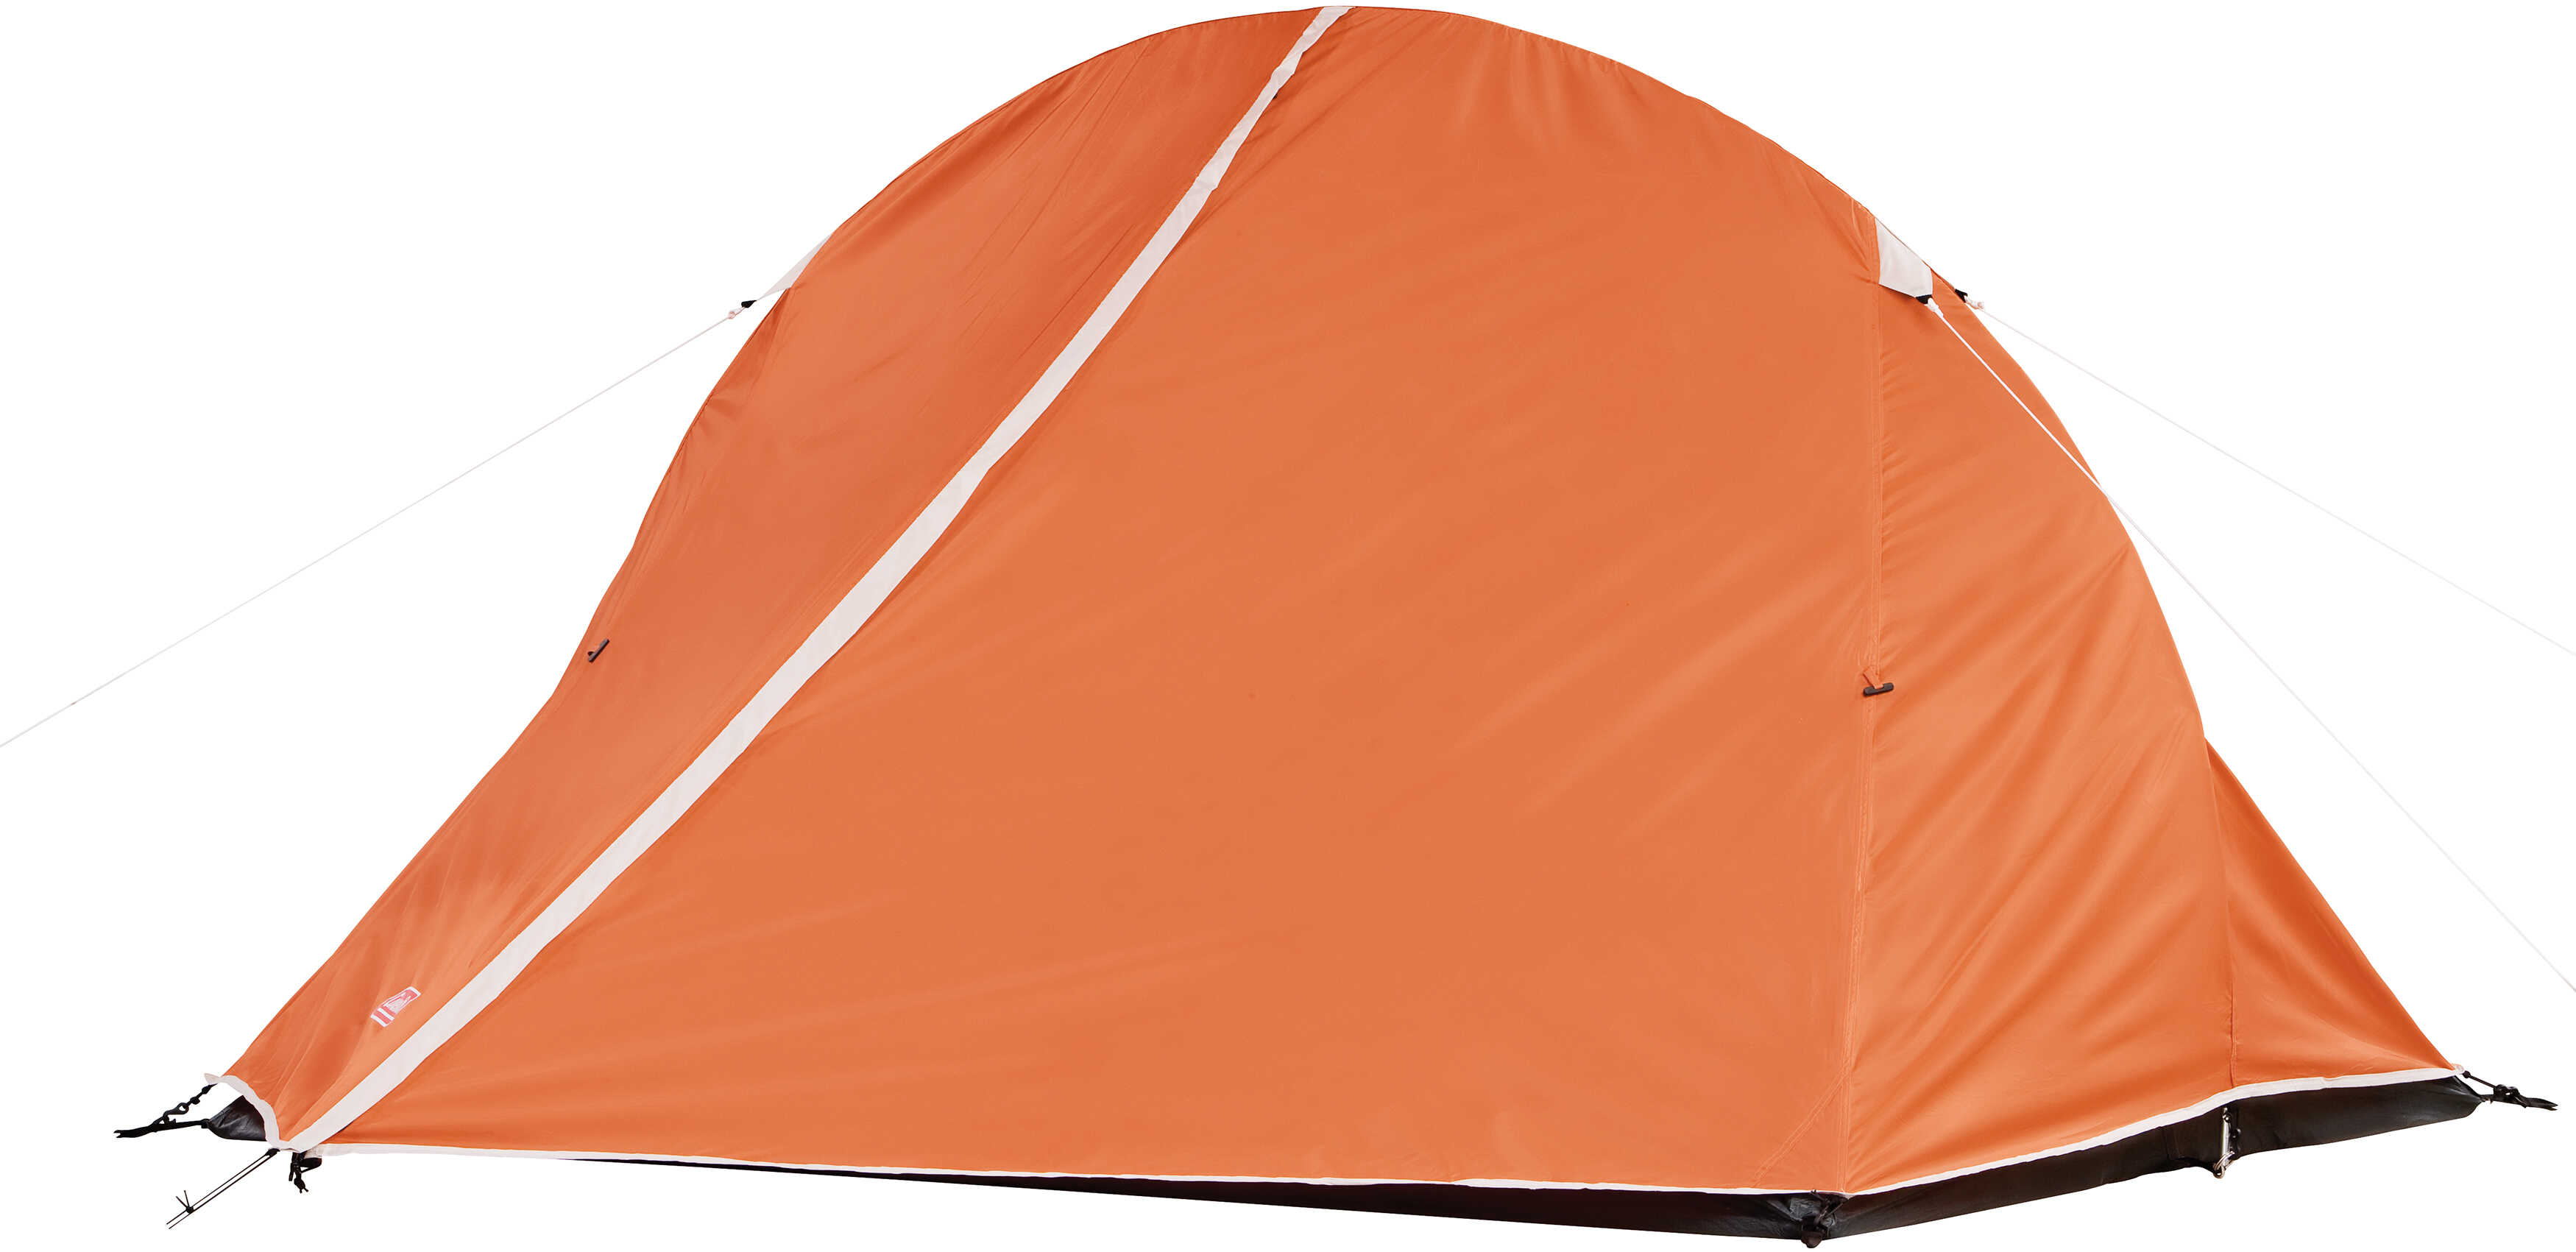 ColemanHooligan&trade 2 Tent - 8' x 6'